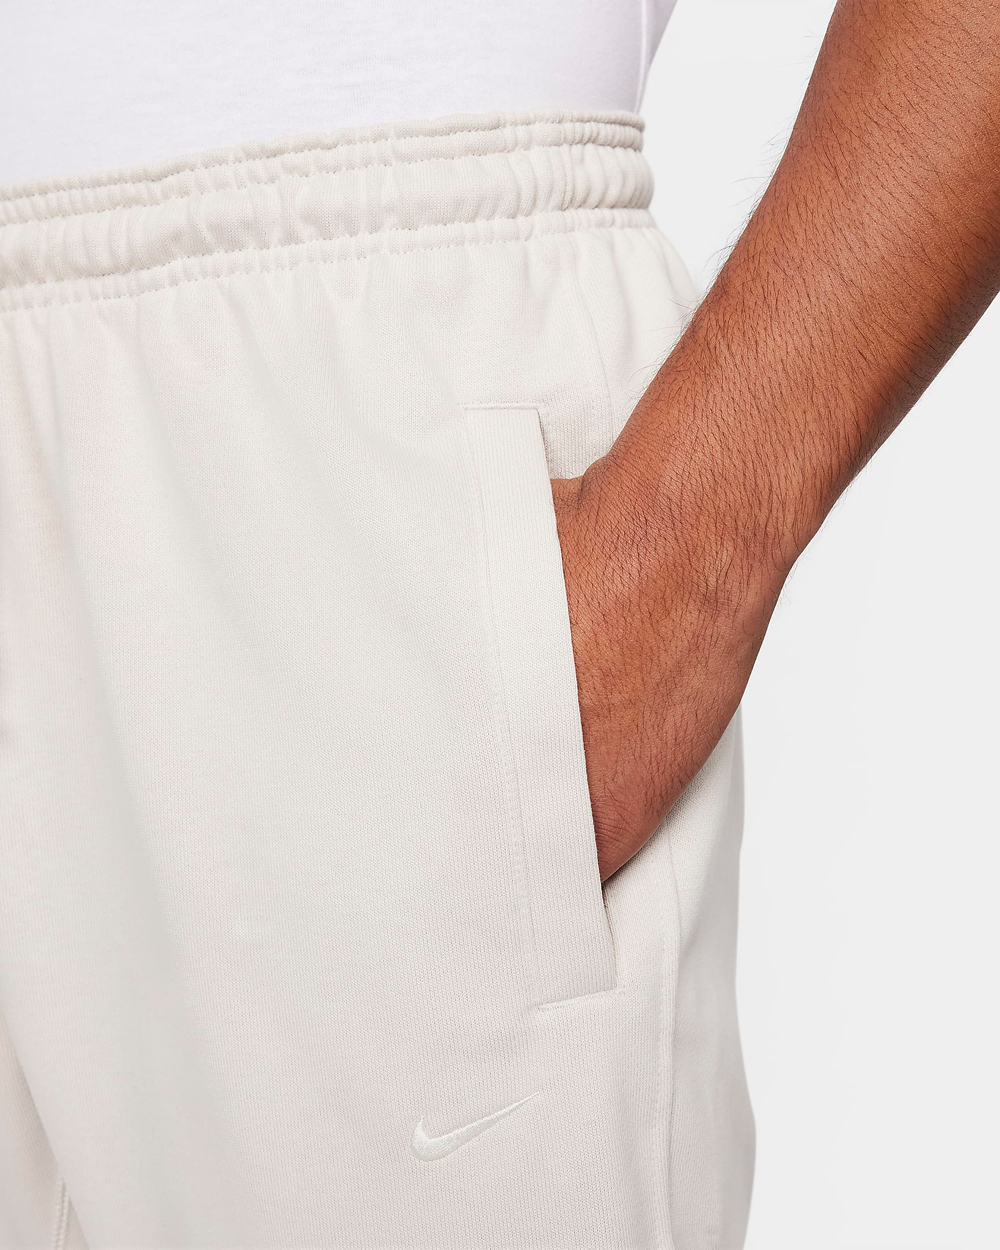 Nike-Standard-Issue-Pants-Light-Orewood-Brown-1